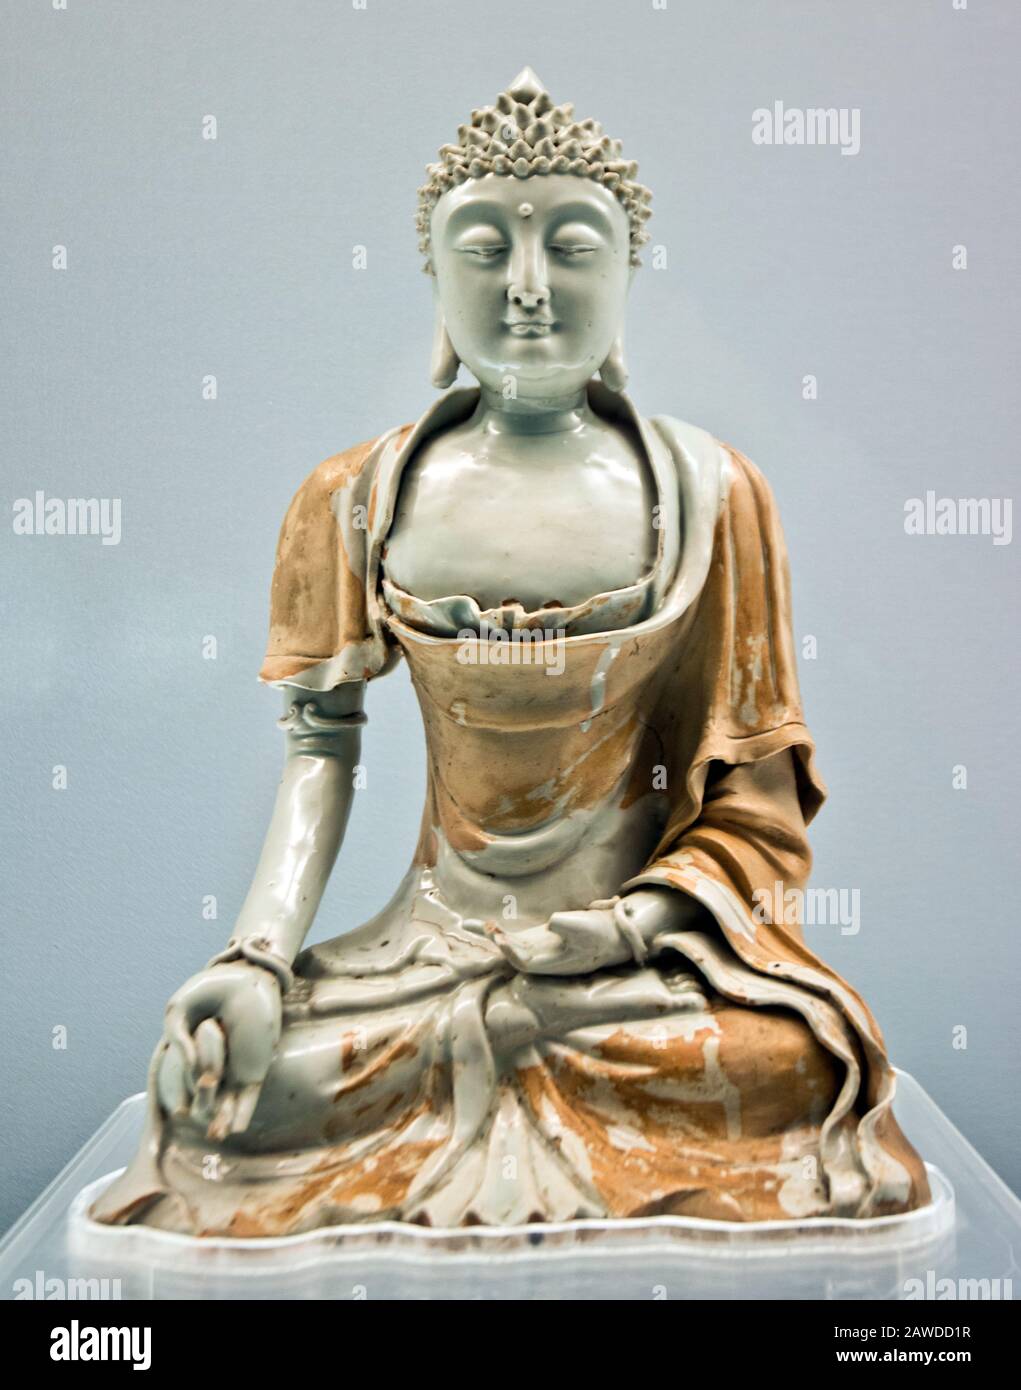 Chinesisches Porzellan: Glasierte Buddhastatue, Jingdezhen Ware, Yuan-Dynastie (AD 1271 - 1368). Shanghai Museum, China Stockfoto